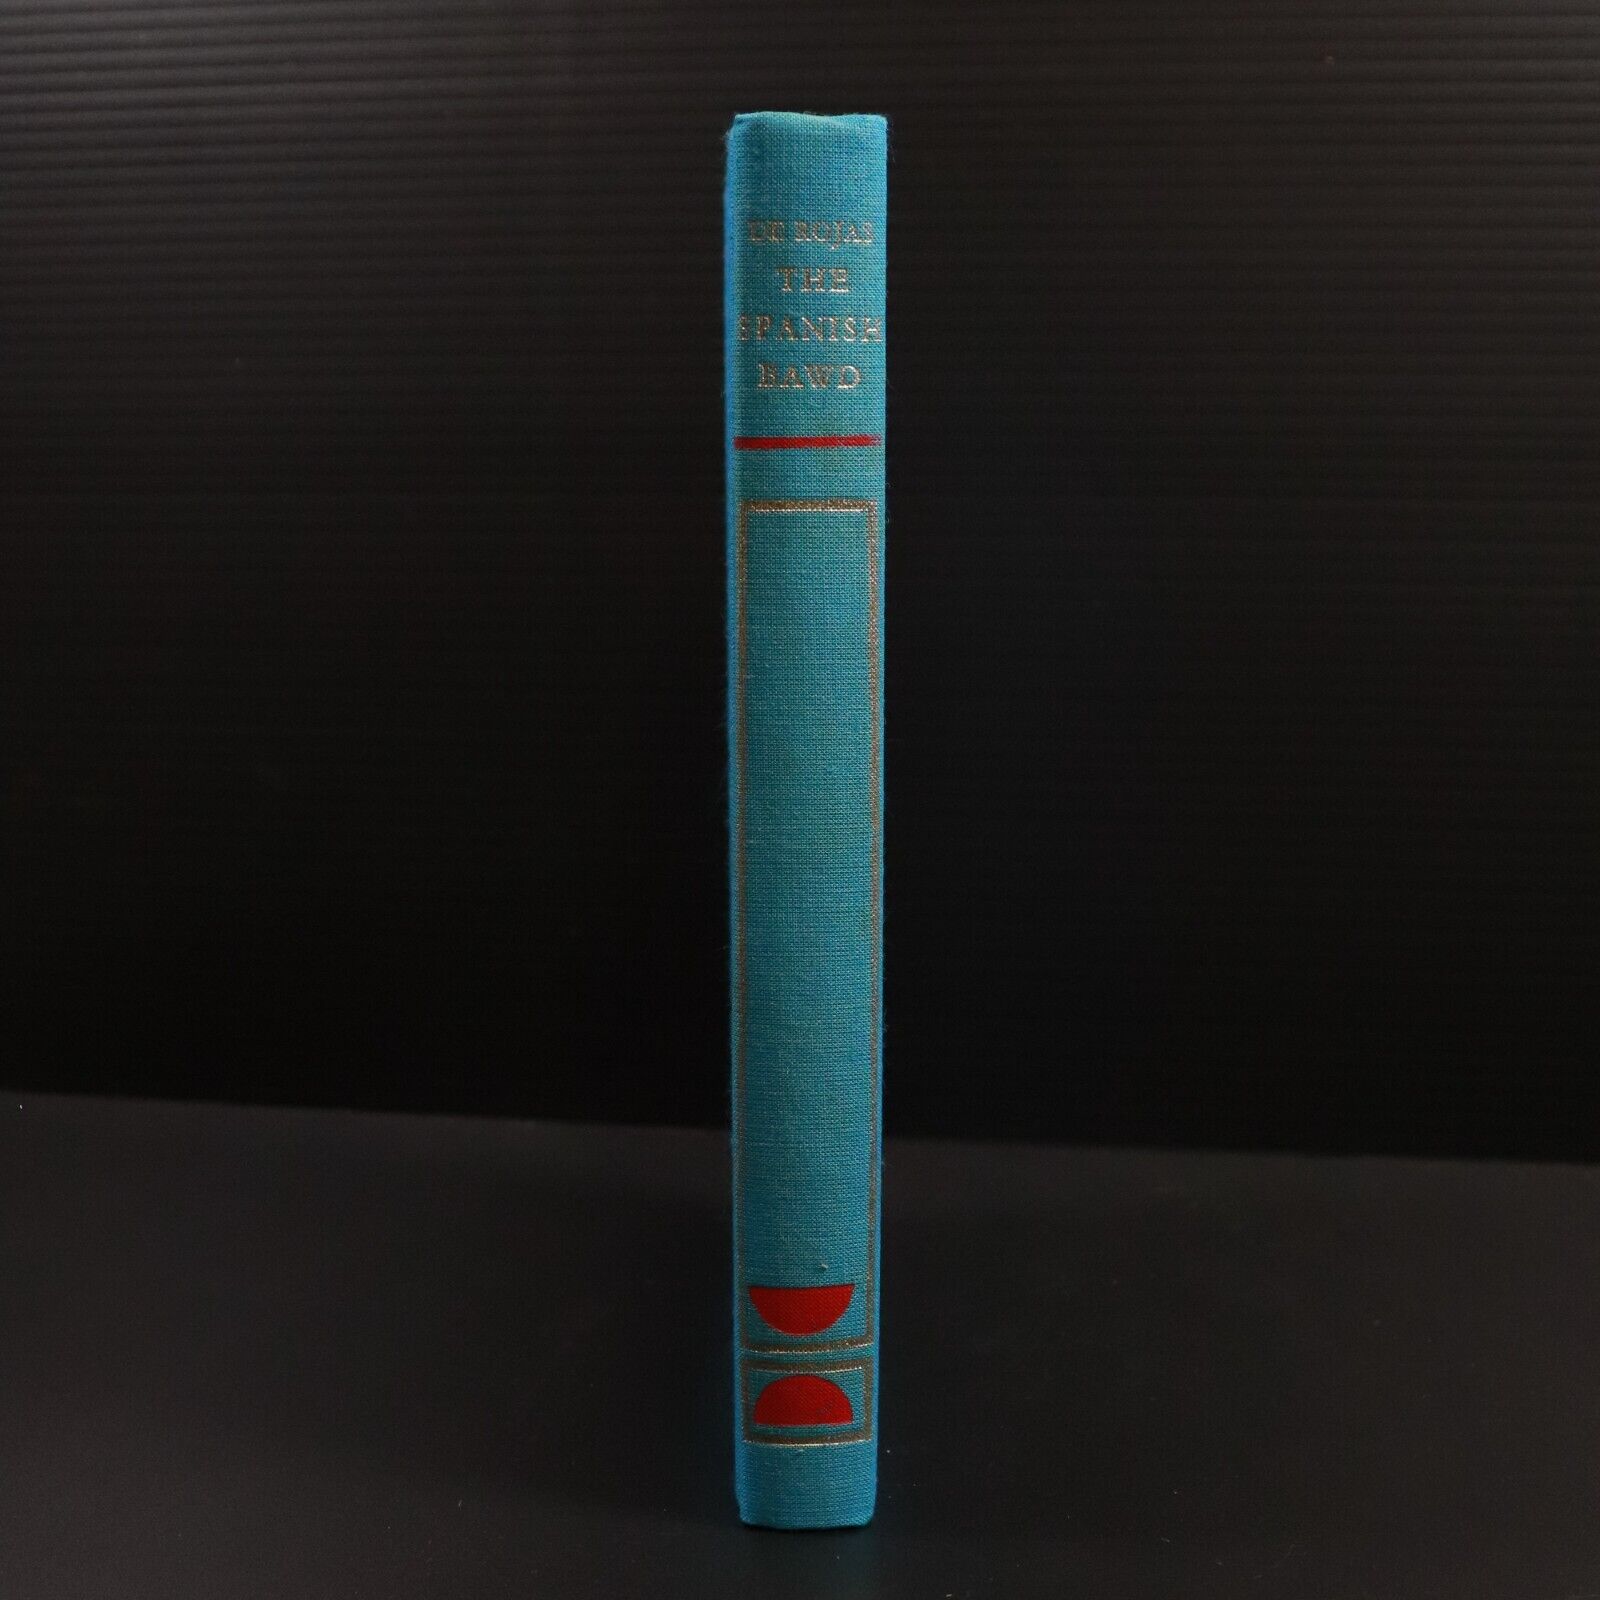 1973 The Spanish Bawd by Fernando De Rojas Folio Society Literature Book